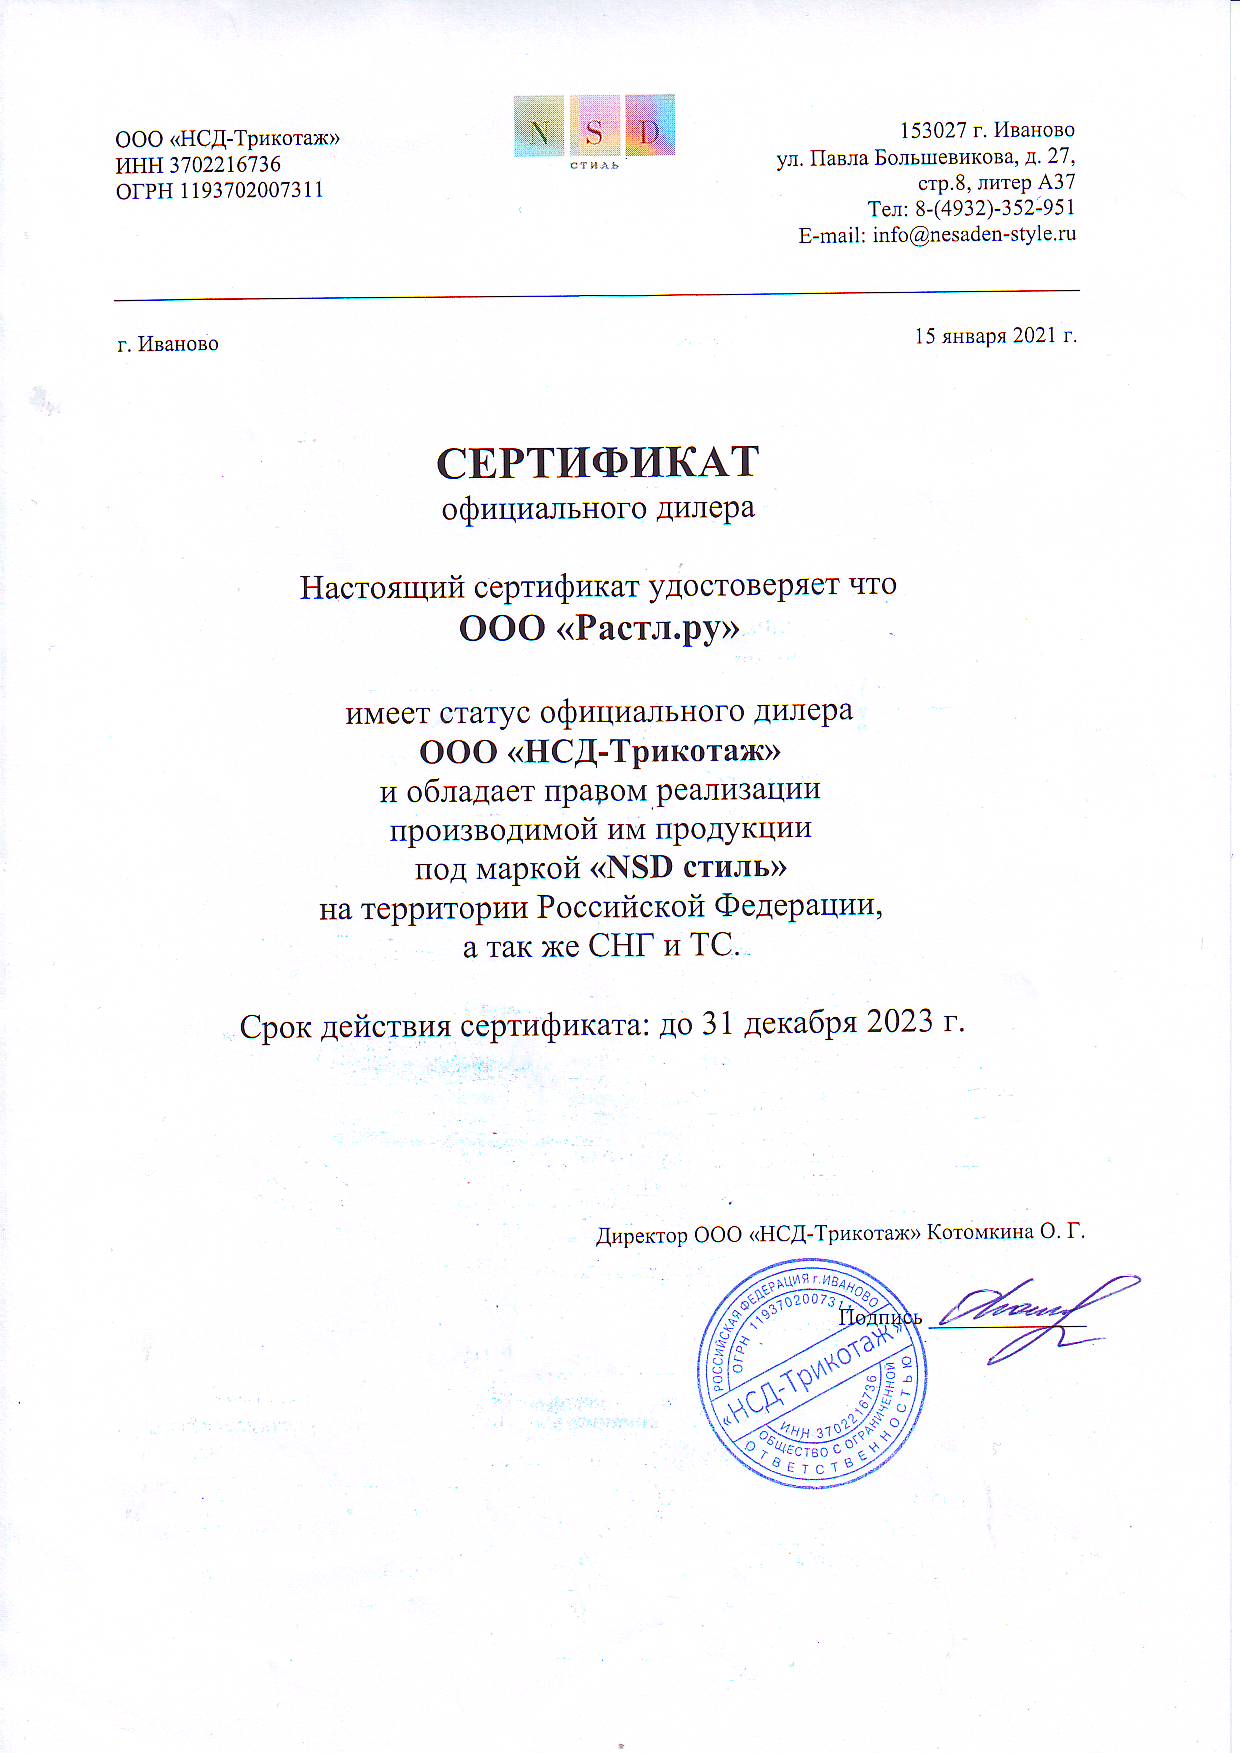 Дилерский сертификат НСД-трикотаж